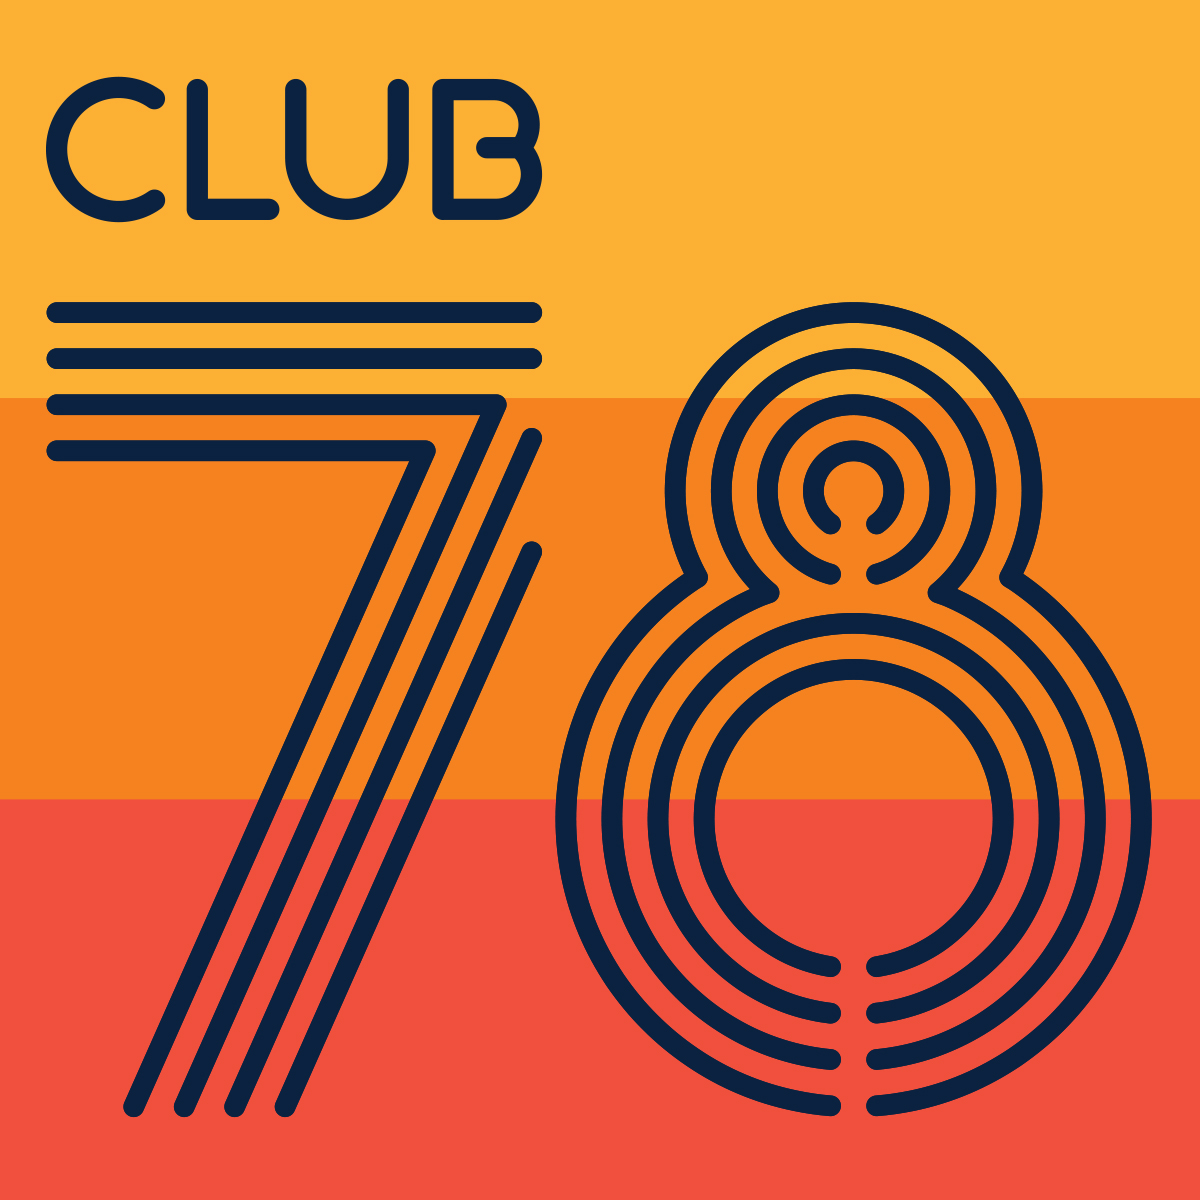 Club 78 typographic sign